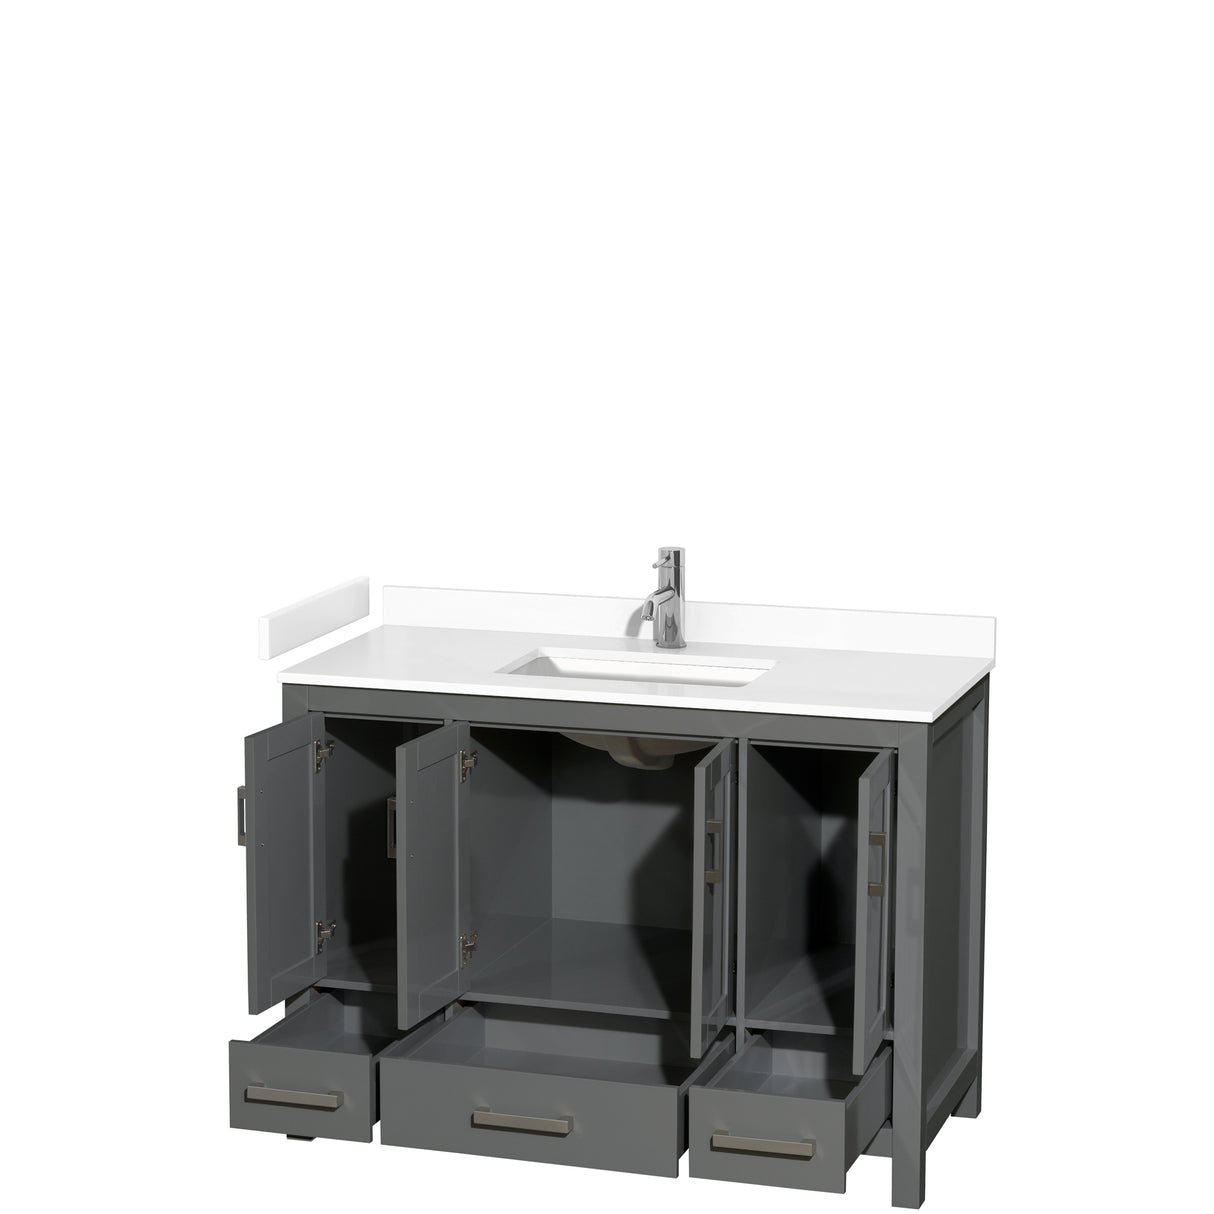 Sheffield 48 Inch Single Bathroom Vanity in Dark Gray White Cultured Marble Countertop Undermount Square Sink No Mirror